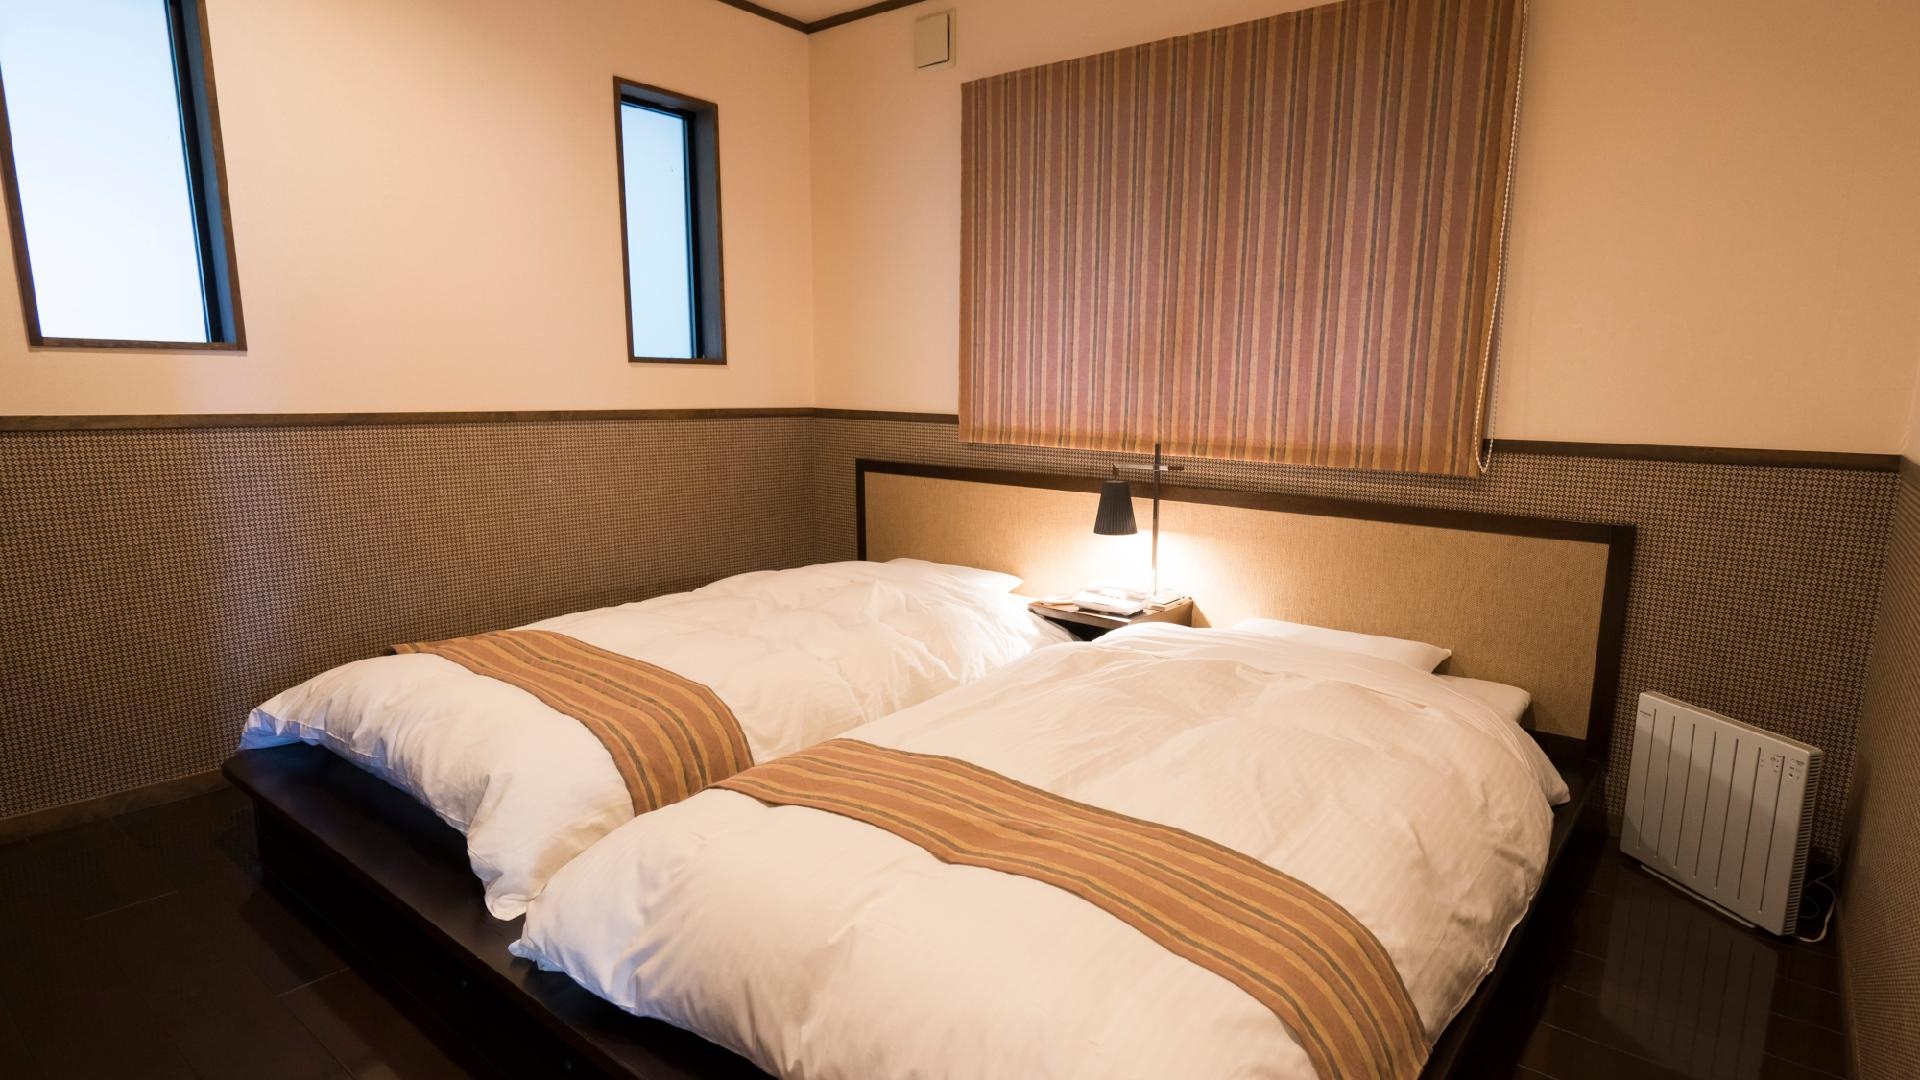 Japanese-style room 10 tatami mats + hearth room + 2 bed bedroom